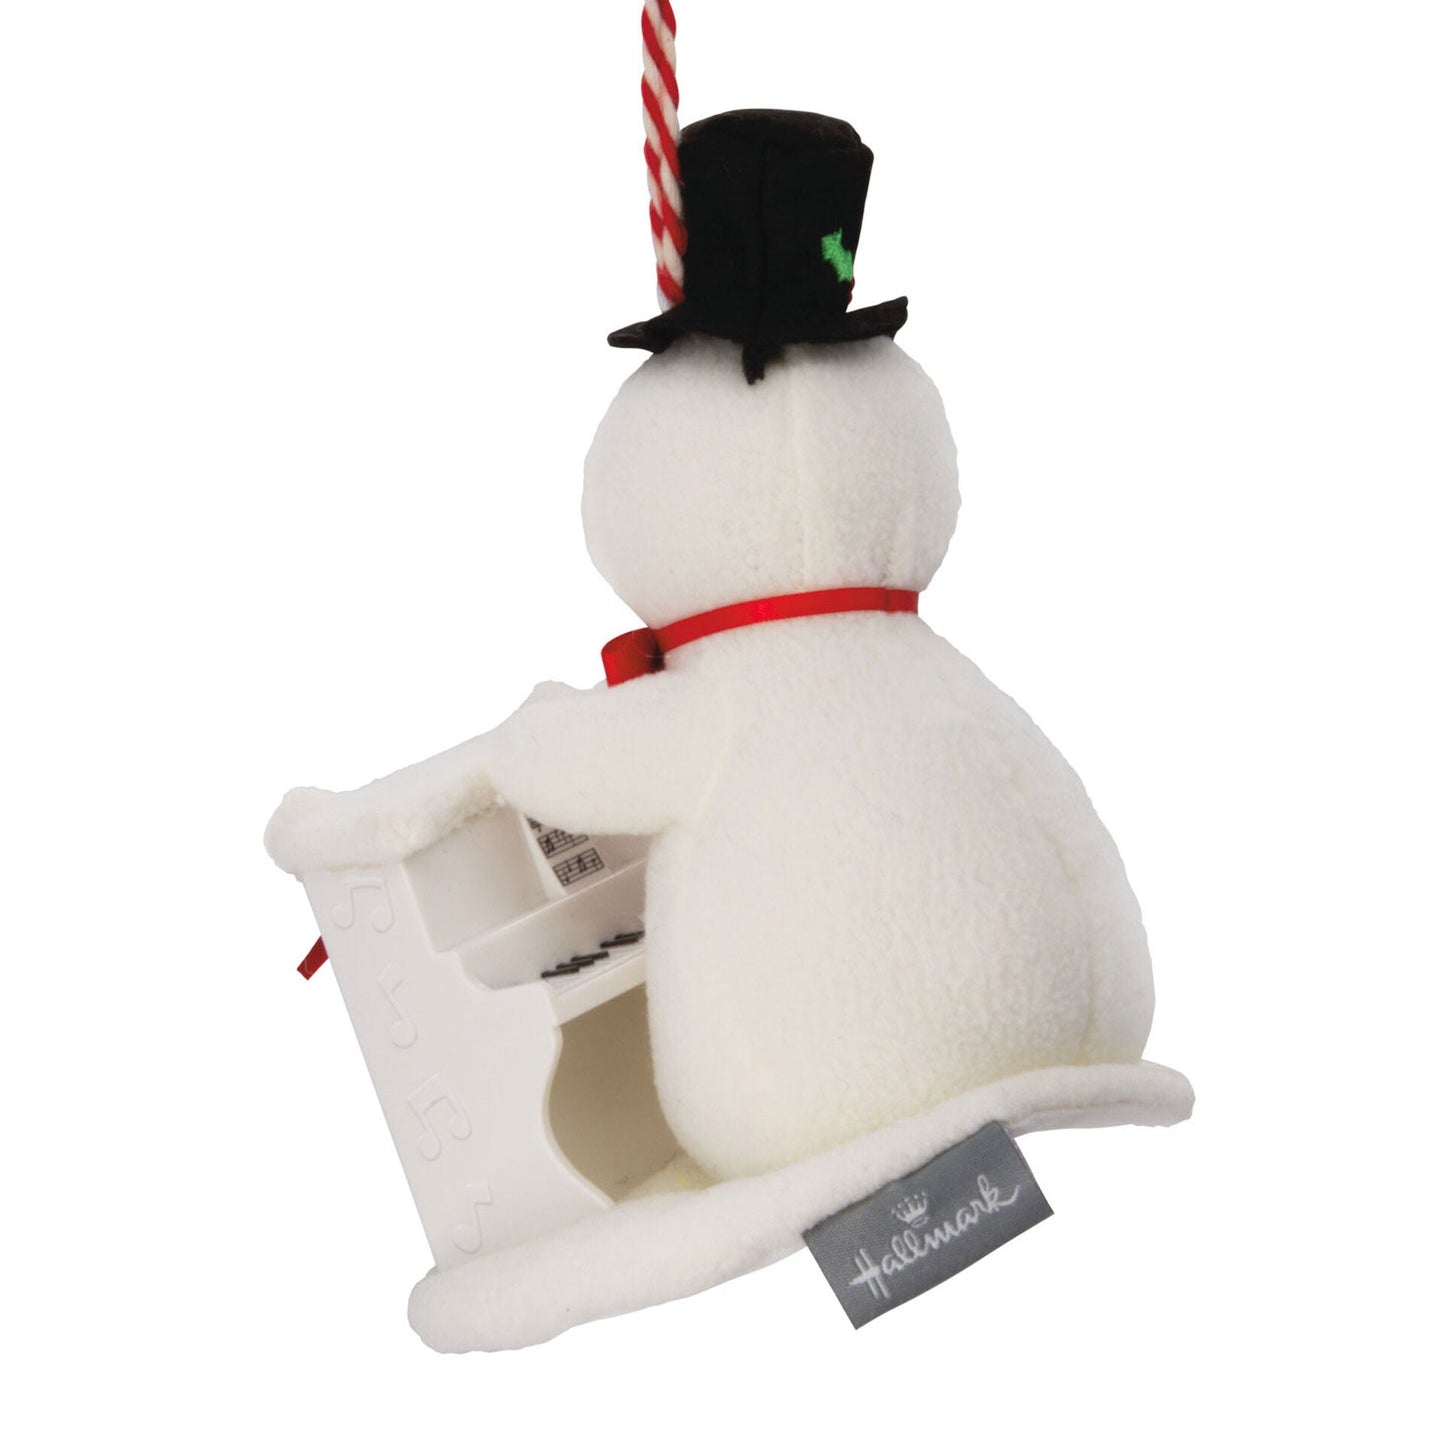 Sing-Along Showman Snowman 2023 Fabric Hallmark Ornament